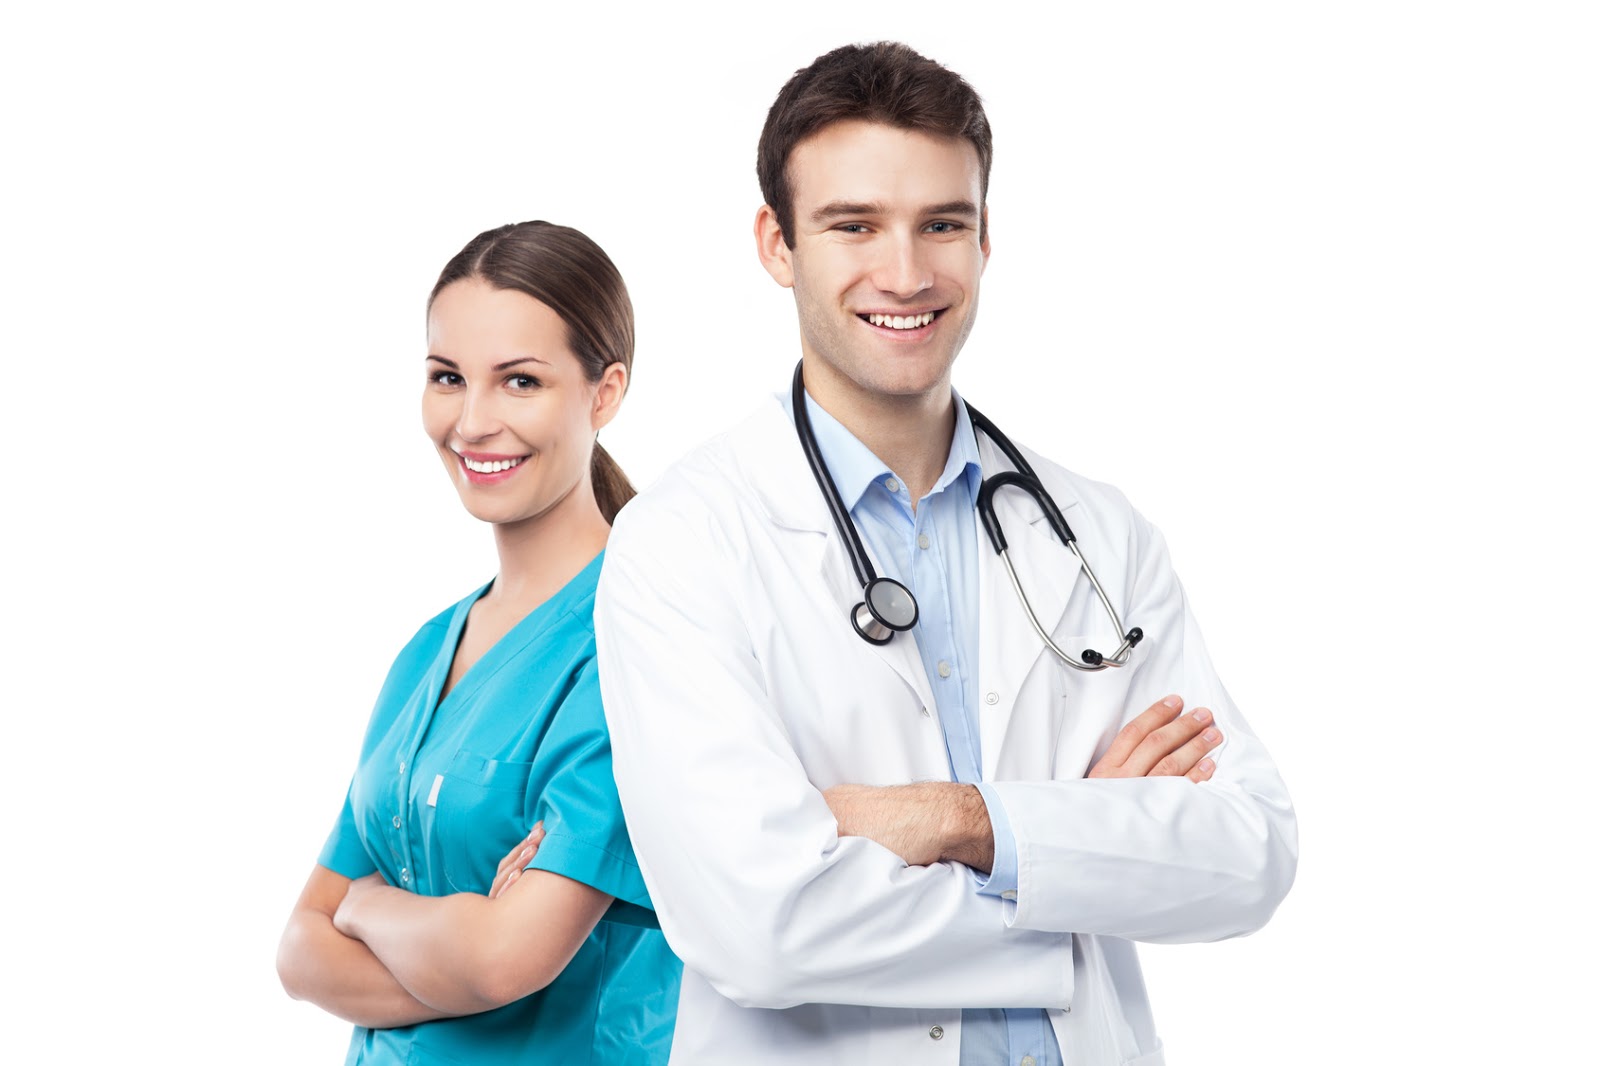 Will-Pursuing-a-Nursing-Program-Help-You-Get-Into-Medical-School